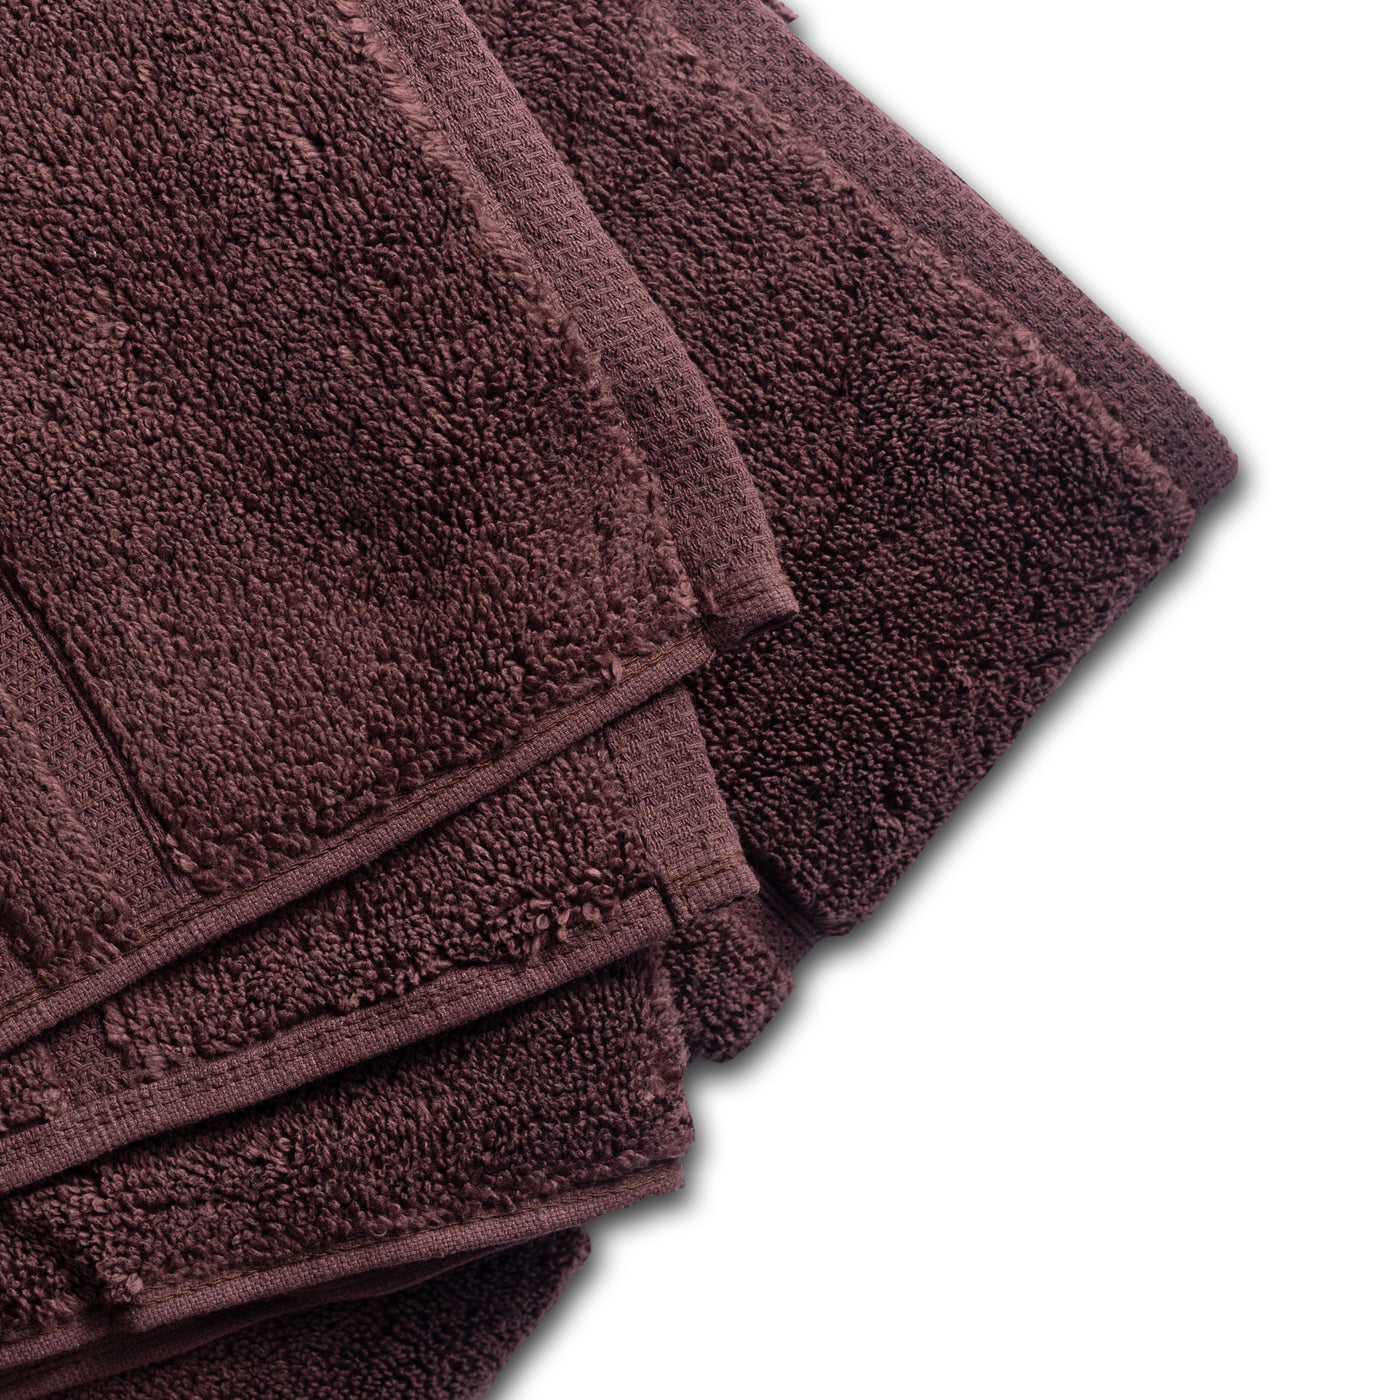 Luxe Fibrosoft Towels (Choco)